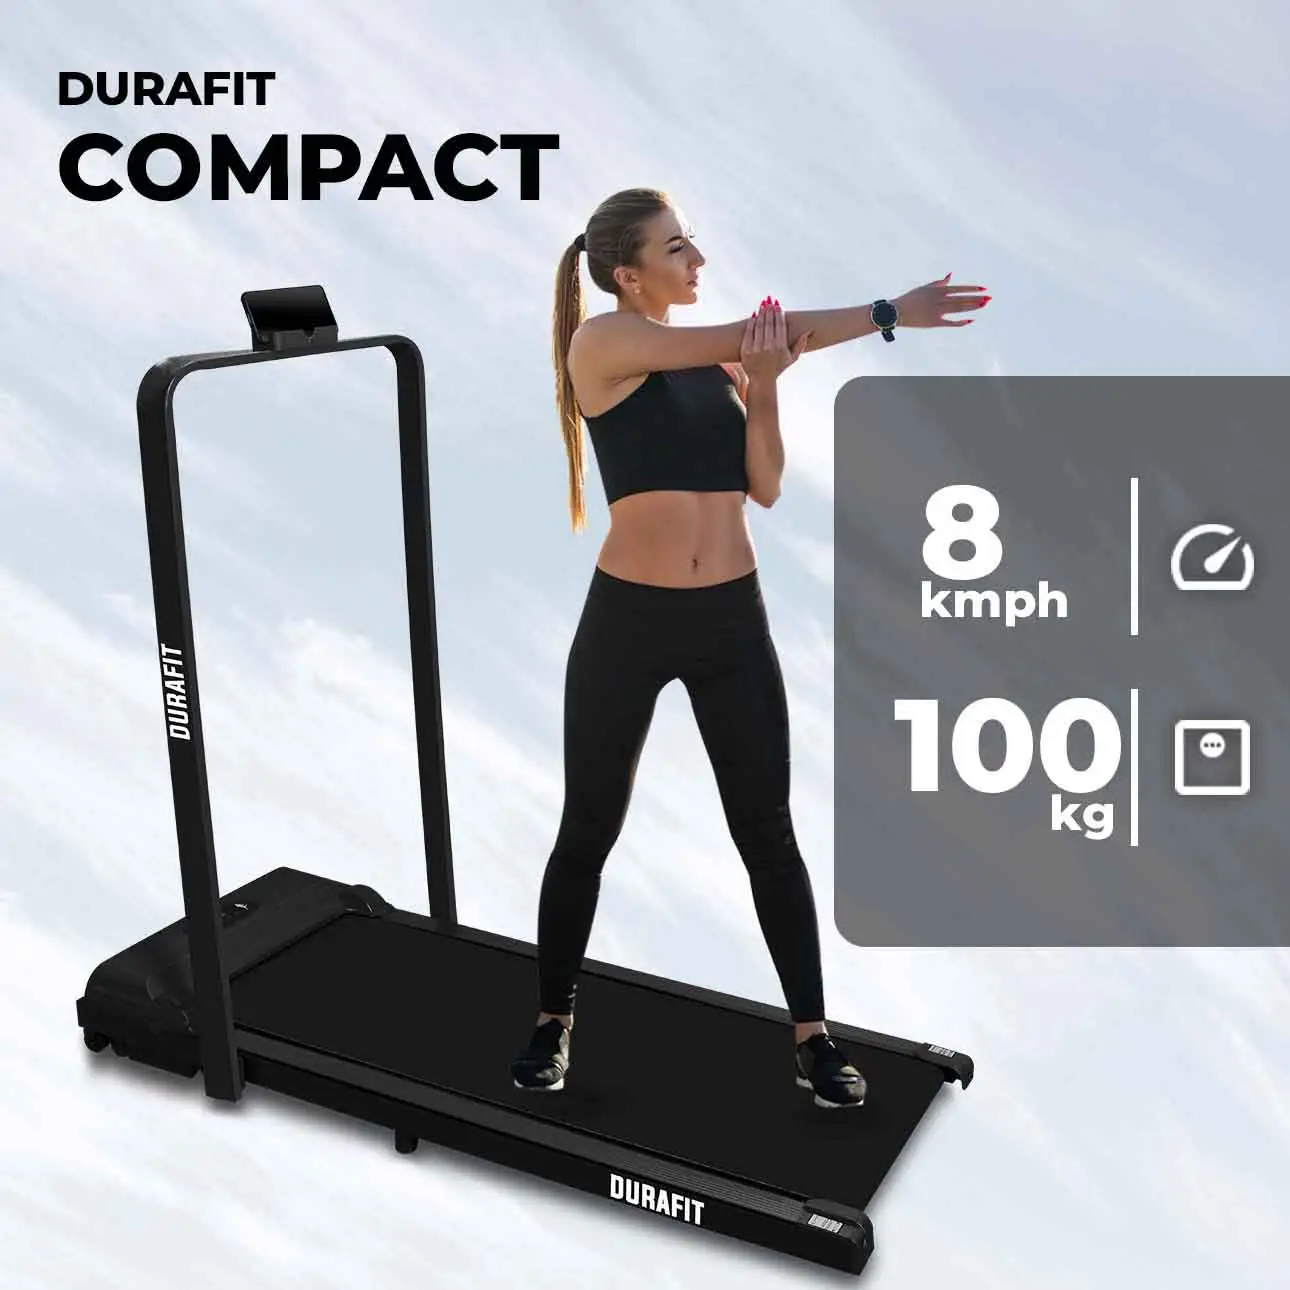 Durafit Compact Black Treadmill with 8kmph 100kg